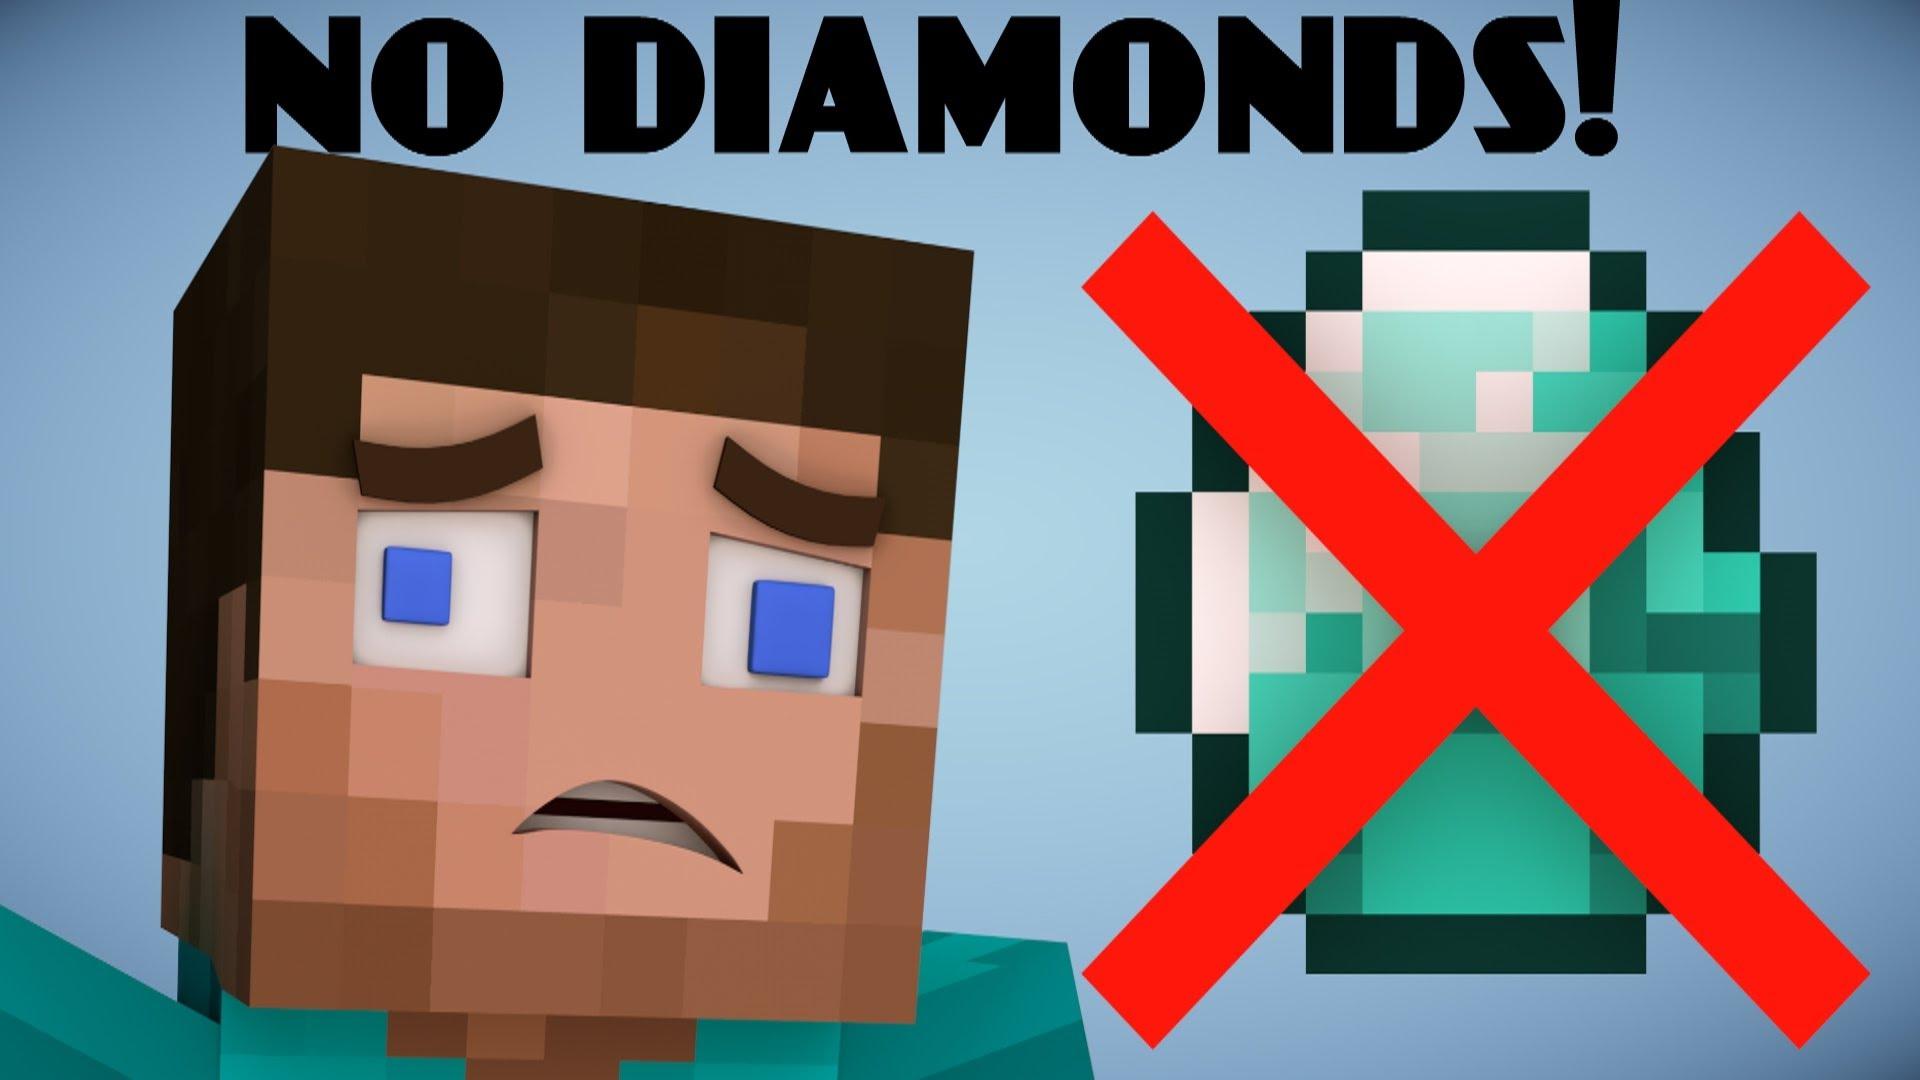 No diamonds